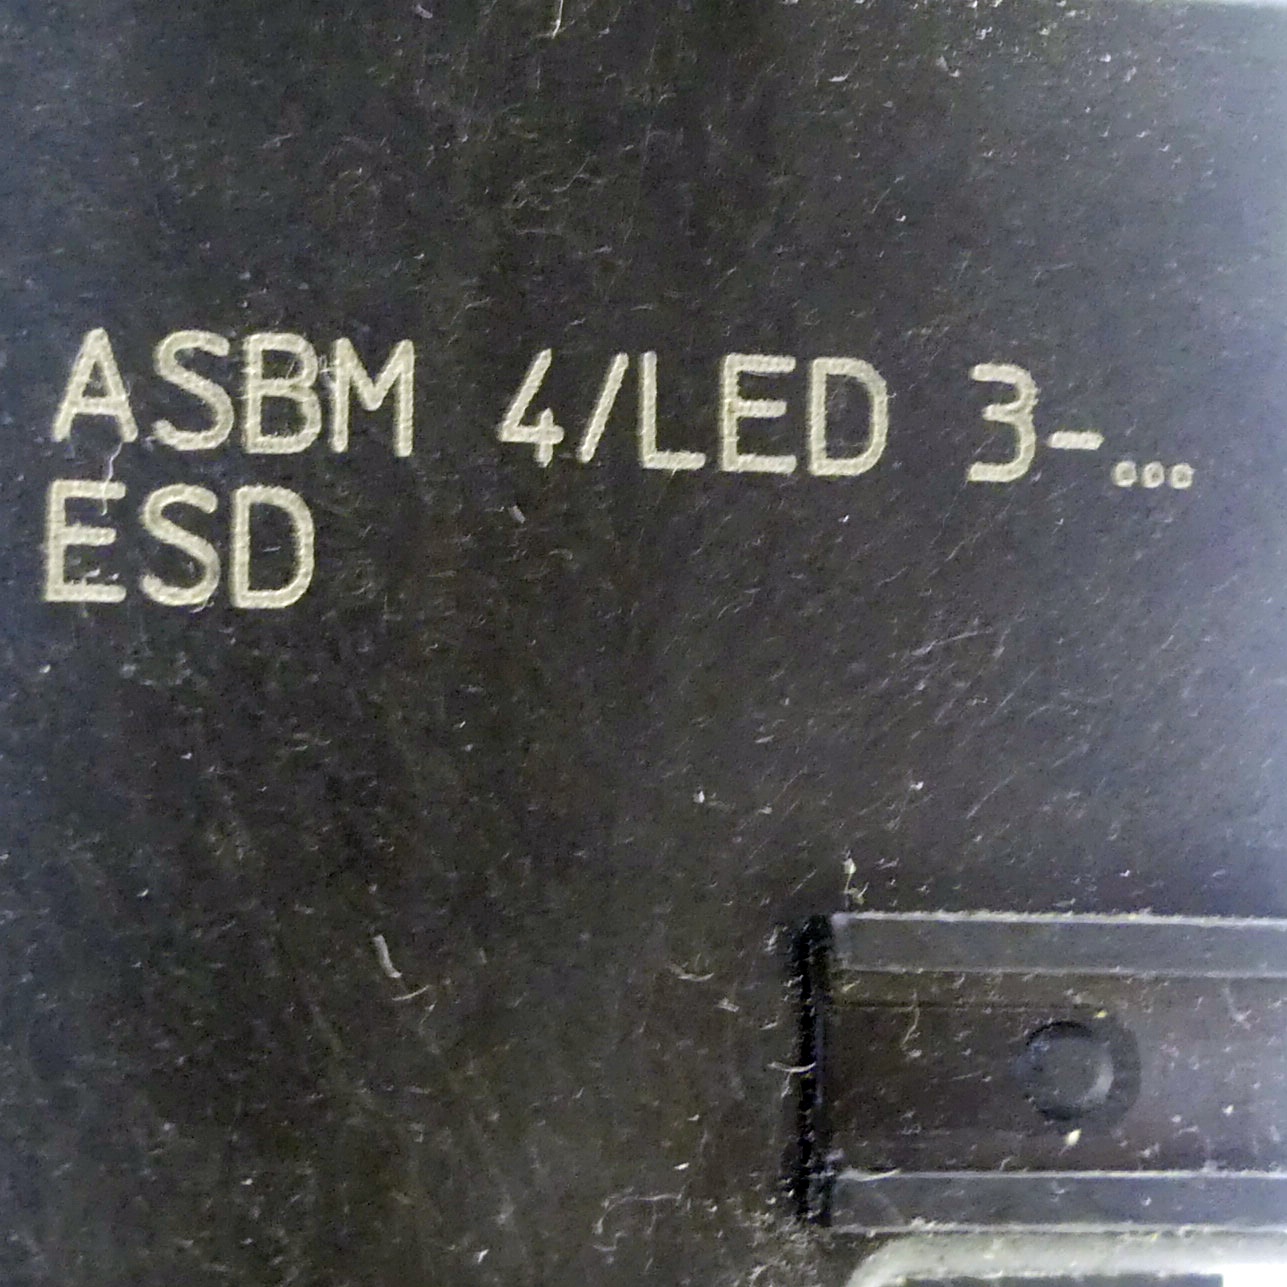 3 Stück Aktor-Sensor-Box ASBM 4/LED 3-ESD 